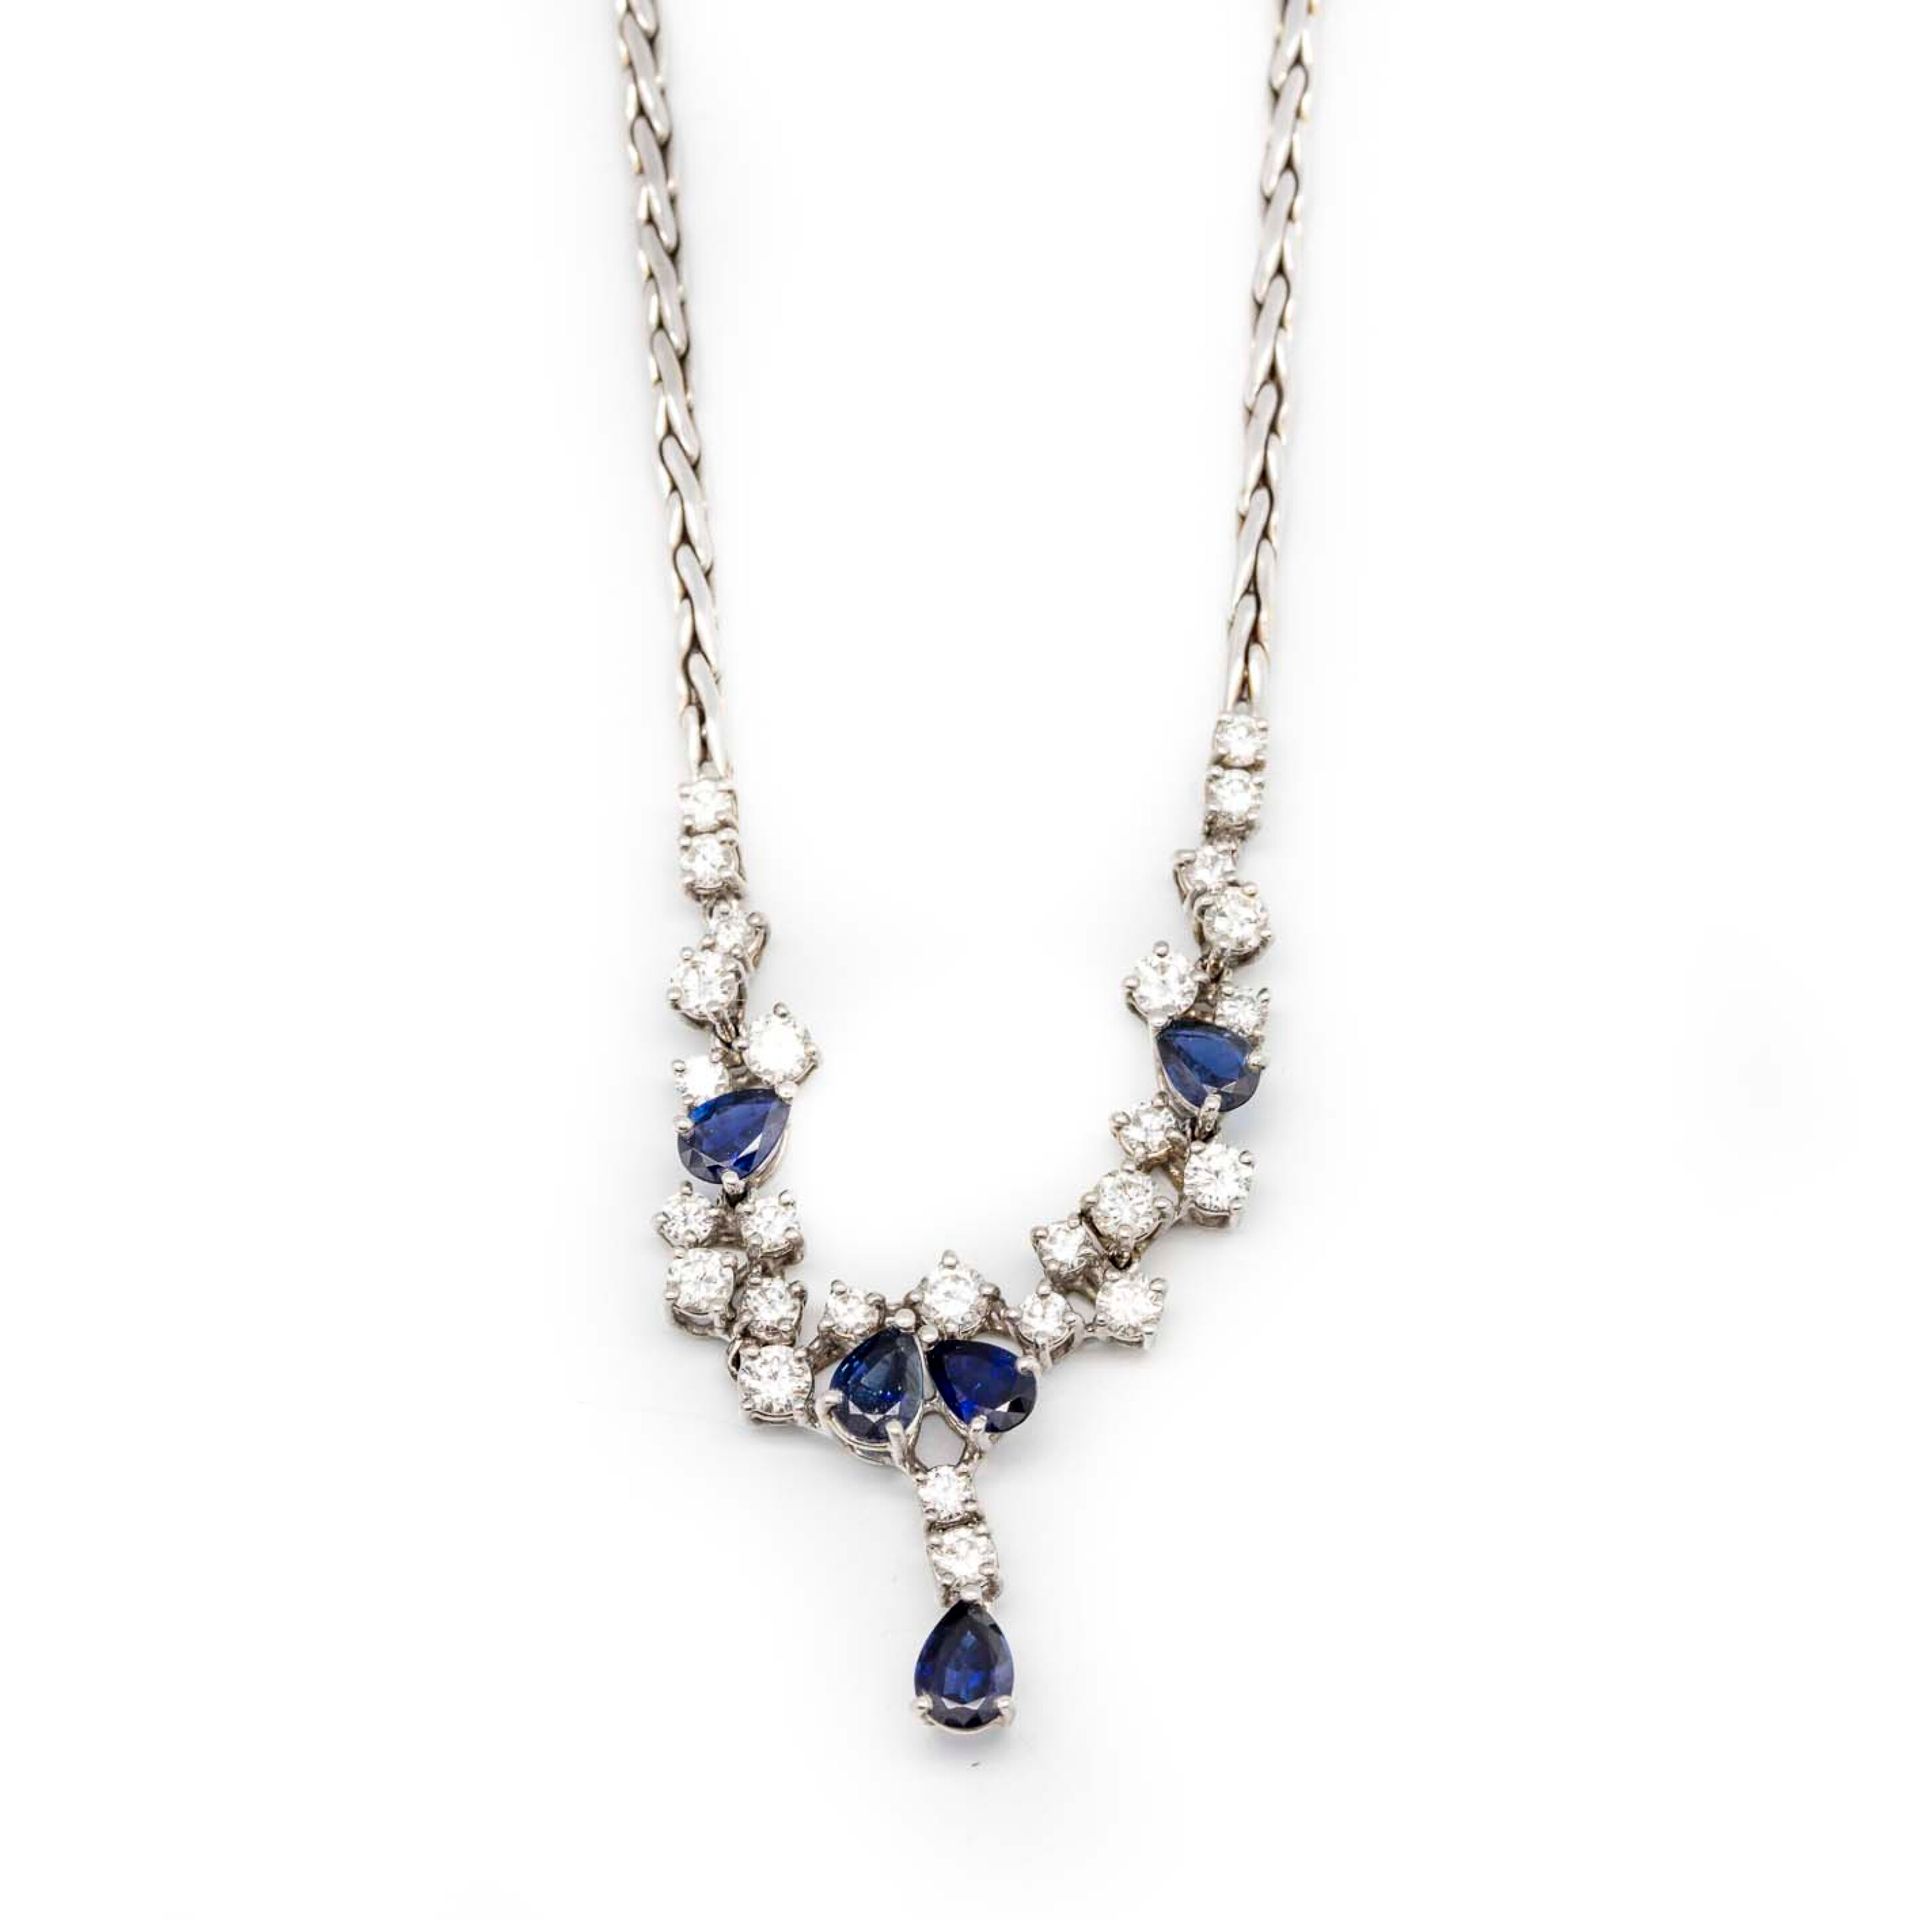 Null 白金项链，装饰有钻石和蓝宝石组成的五角形图案，最后是蓝宝石坠饰

毛重：20.7克。

约1960年

在其案例中